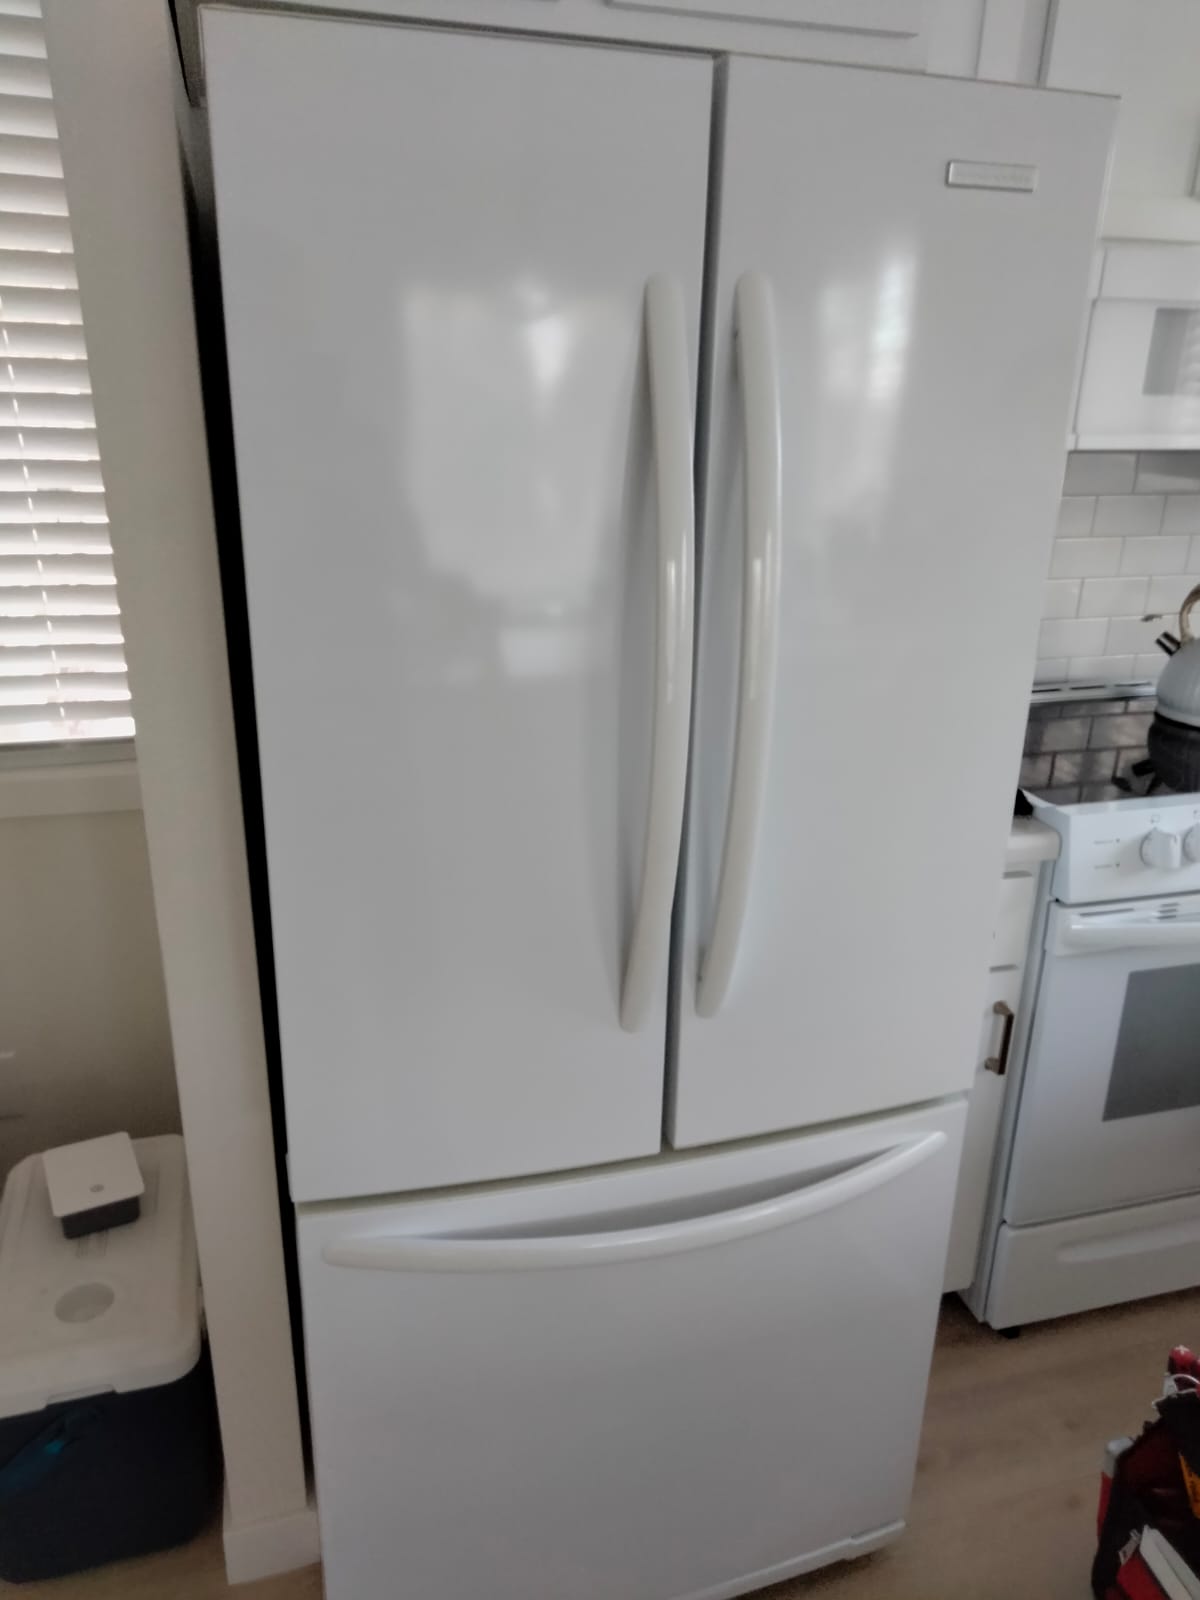 LG refrigerators